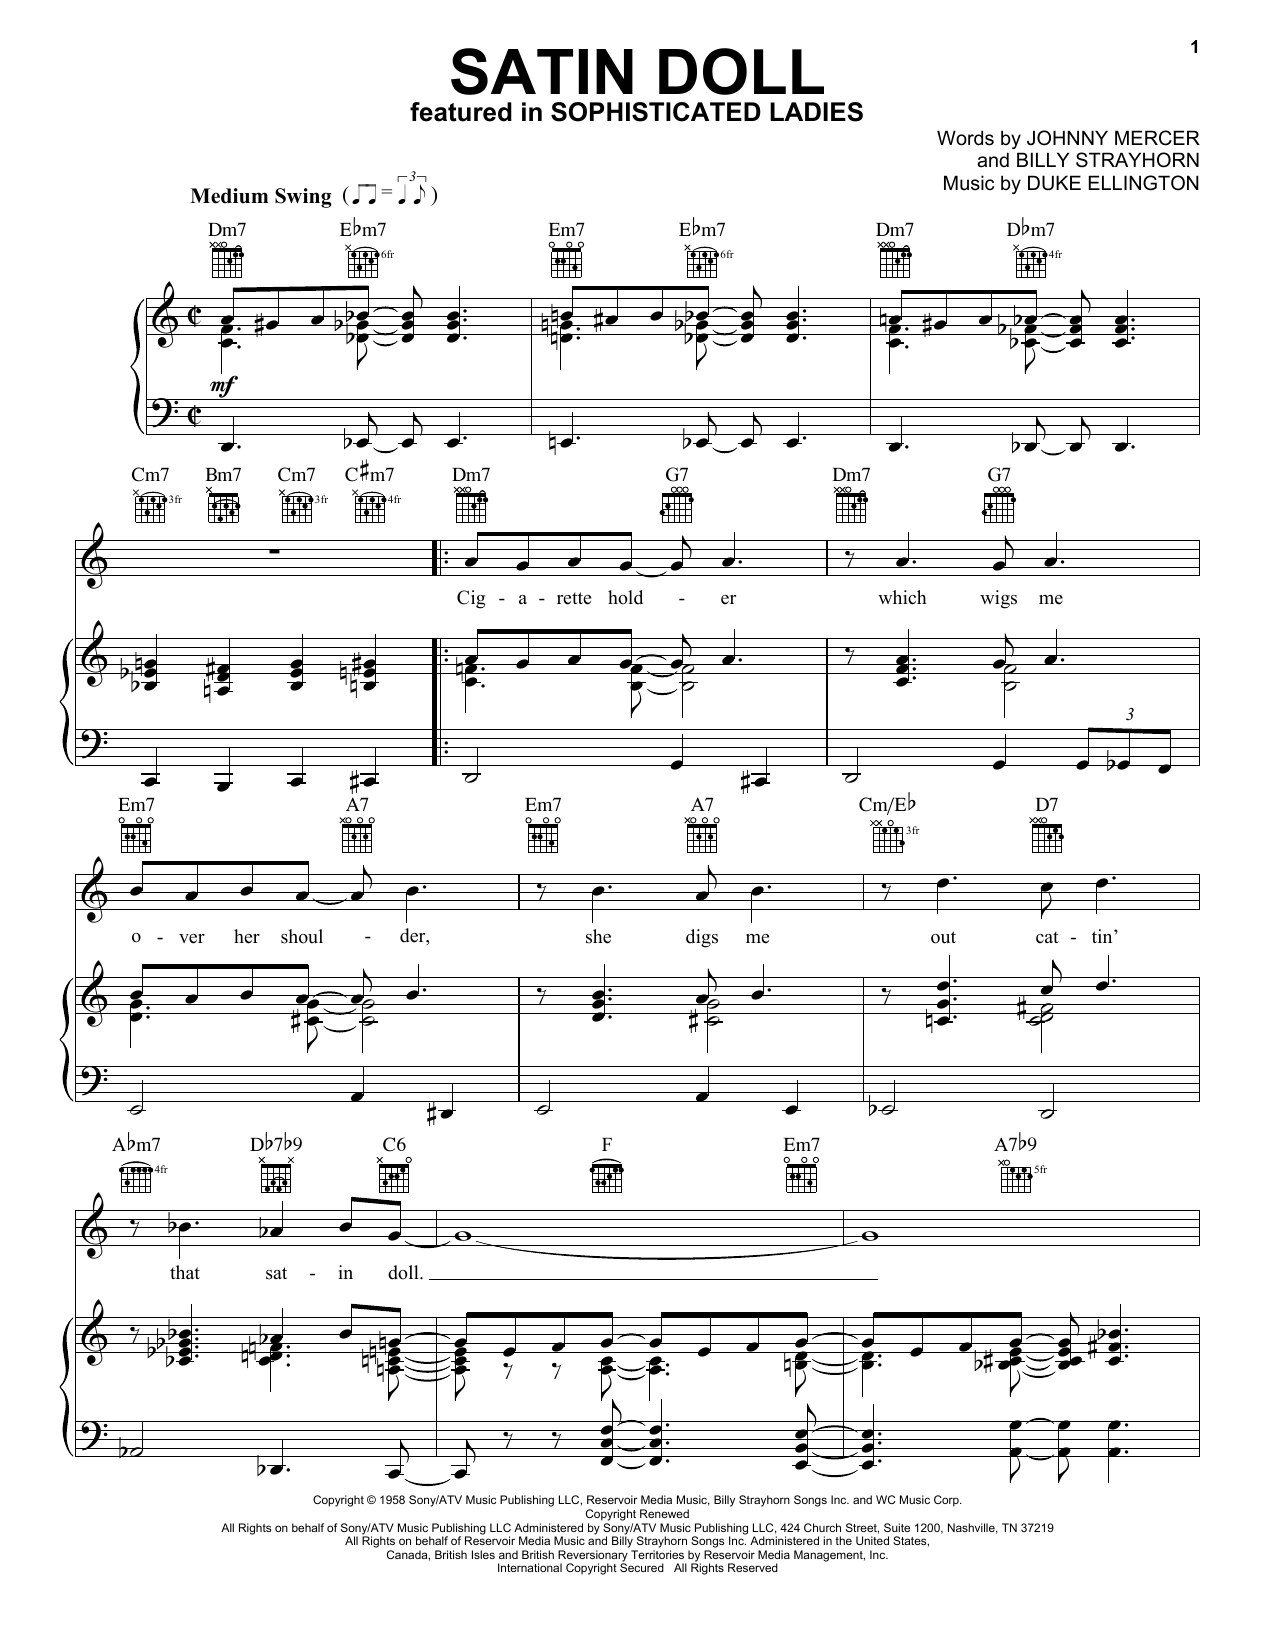 Duke Ellington Satin Doll Sheet Music Notes & Chords for Clarinet - Download or Print PDF